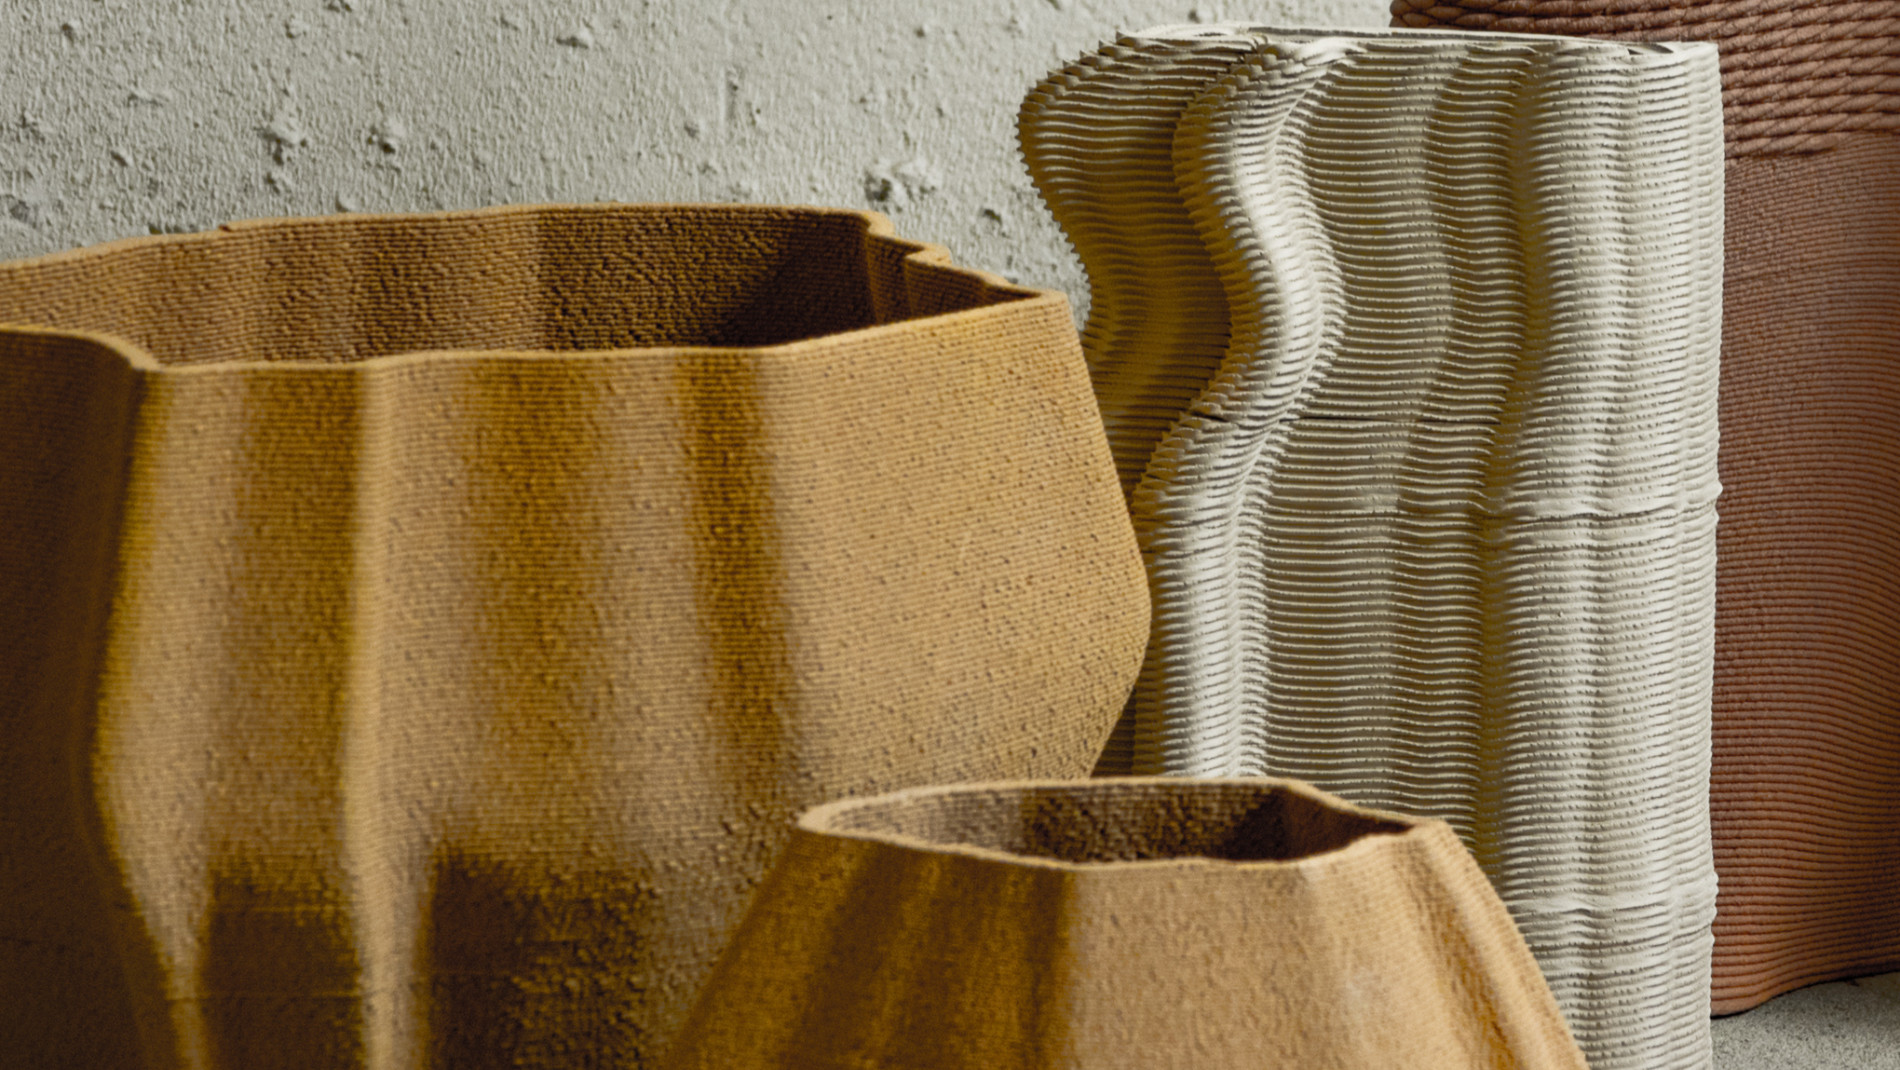 Valdez: The 3D-printed vases